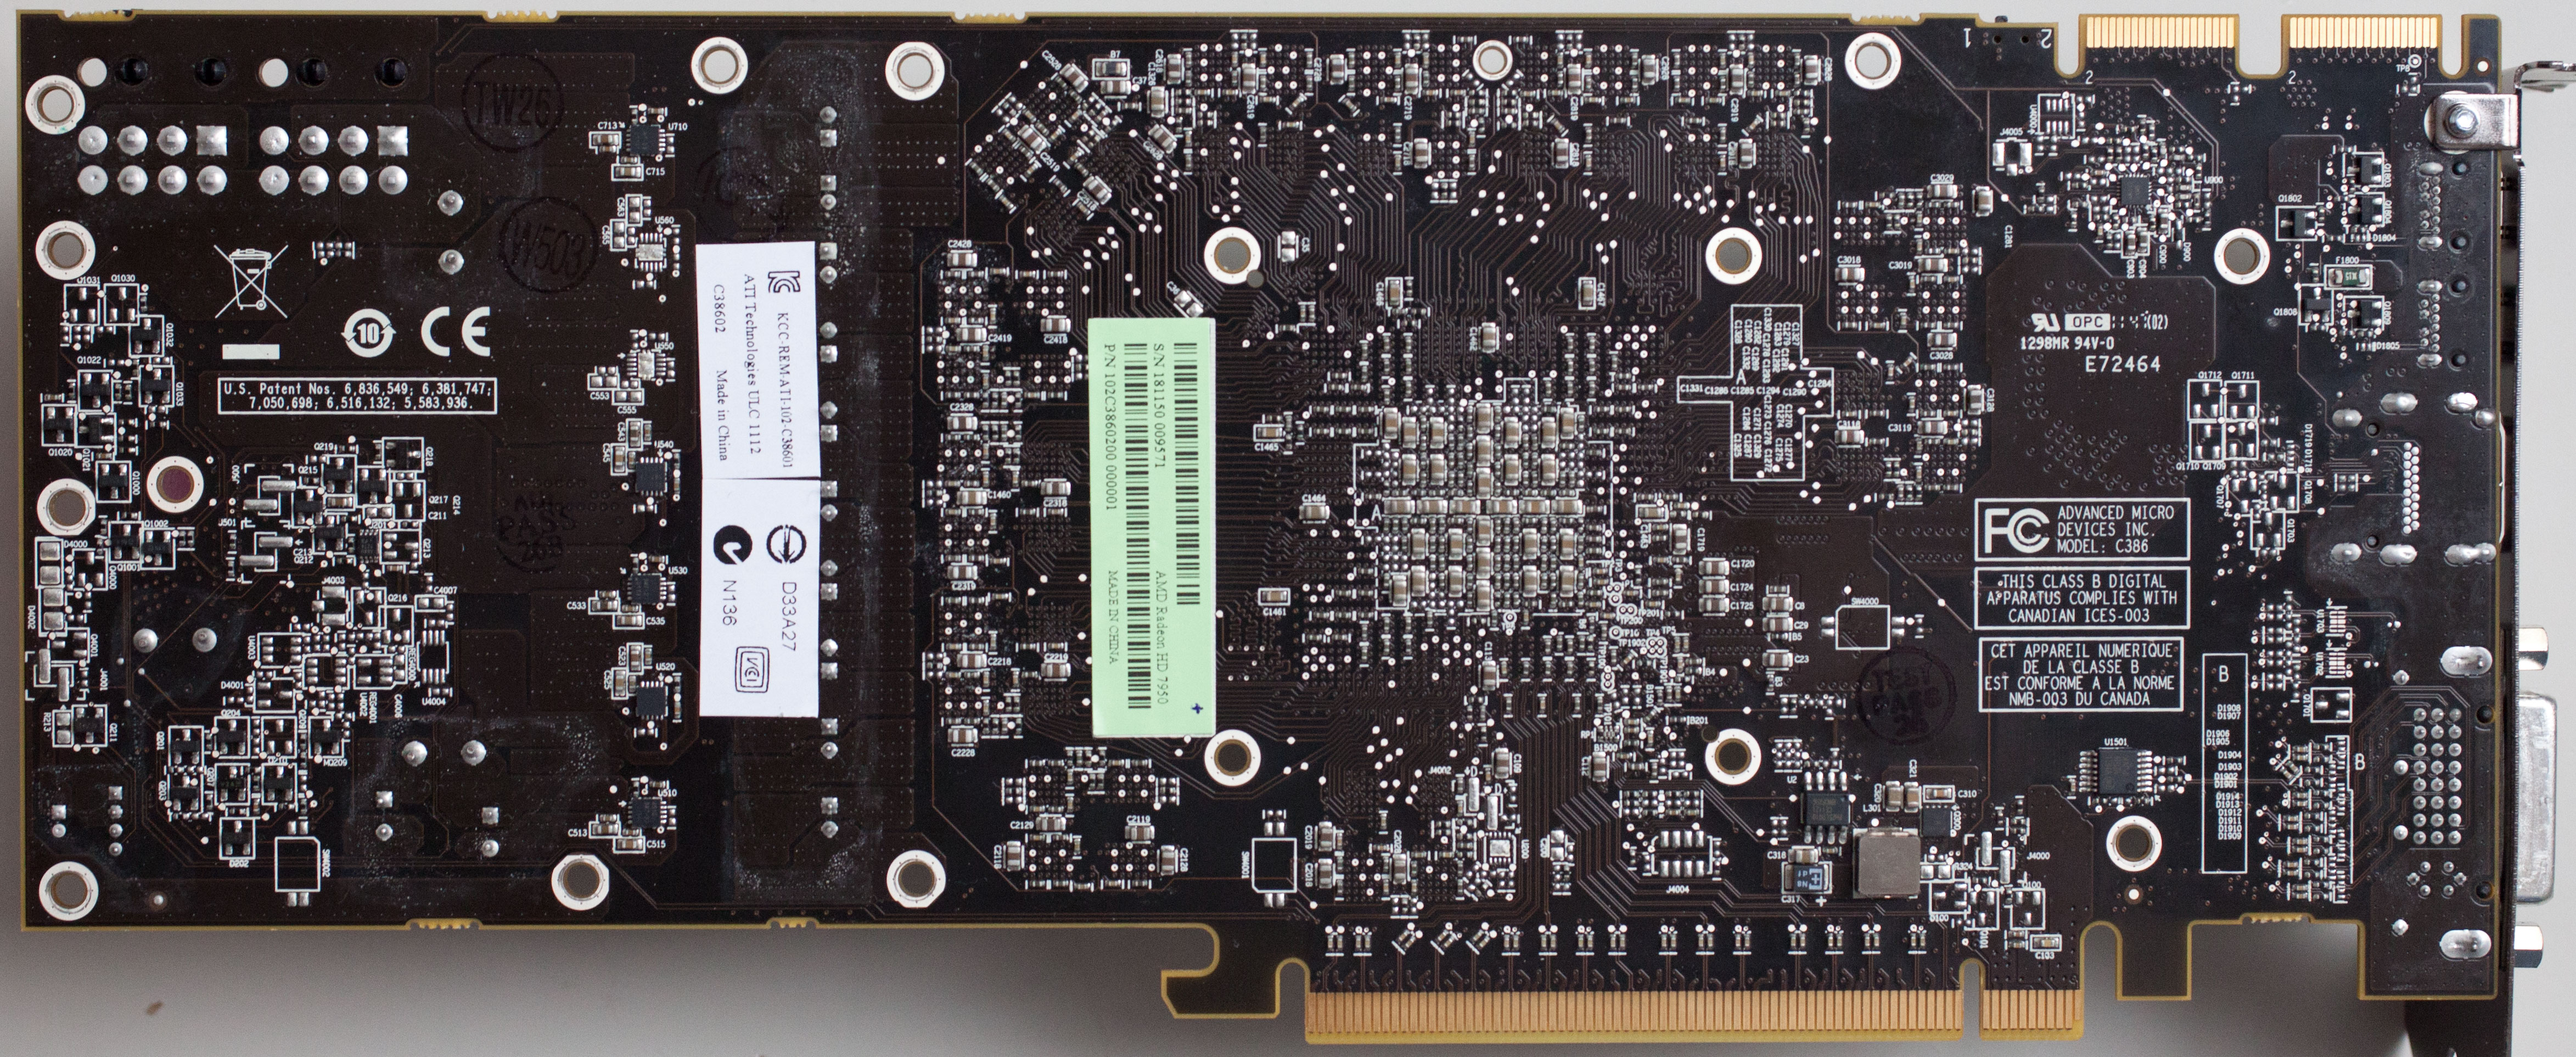 AMD Radeon HD 7950 3 GB Review - The Card | TechPowerUp